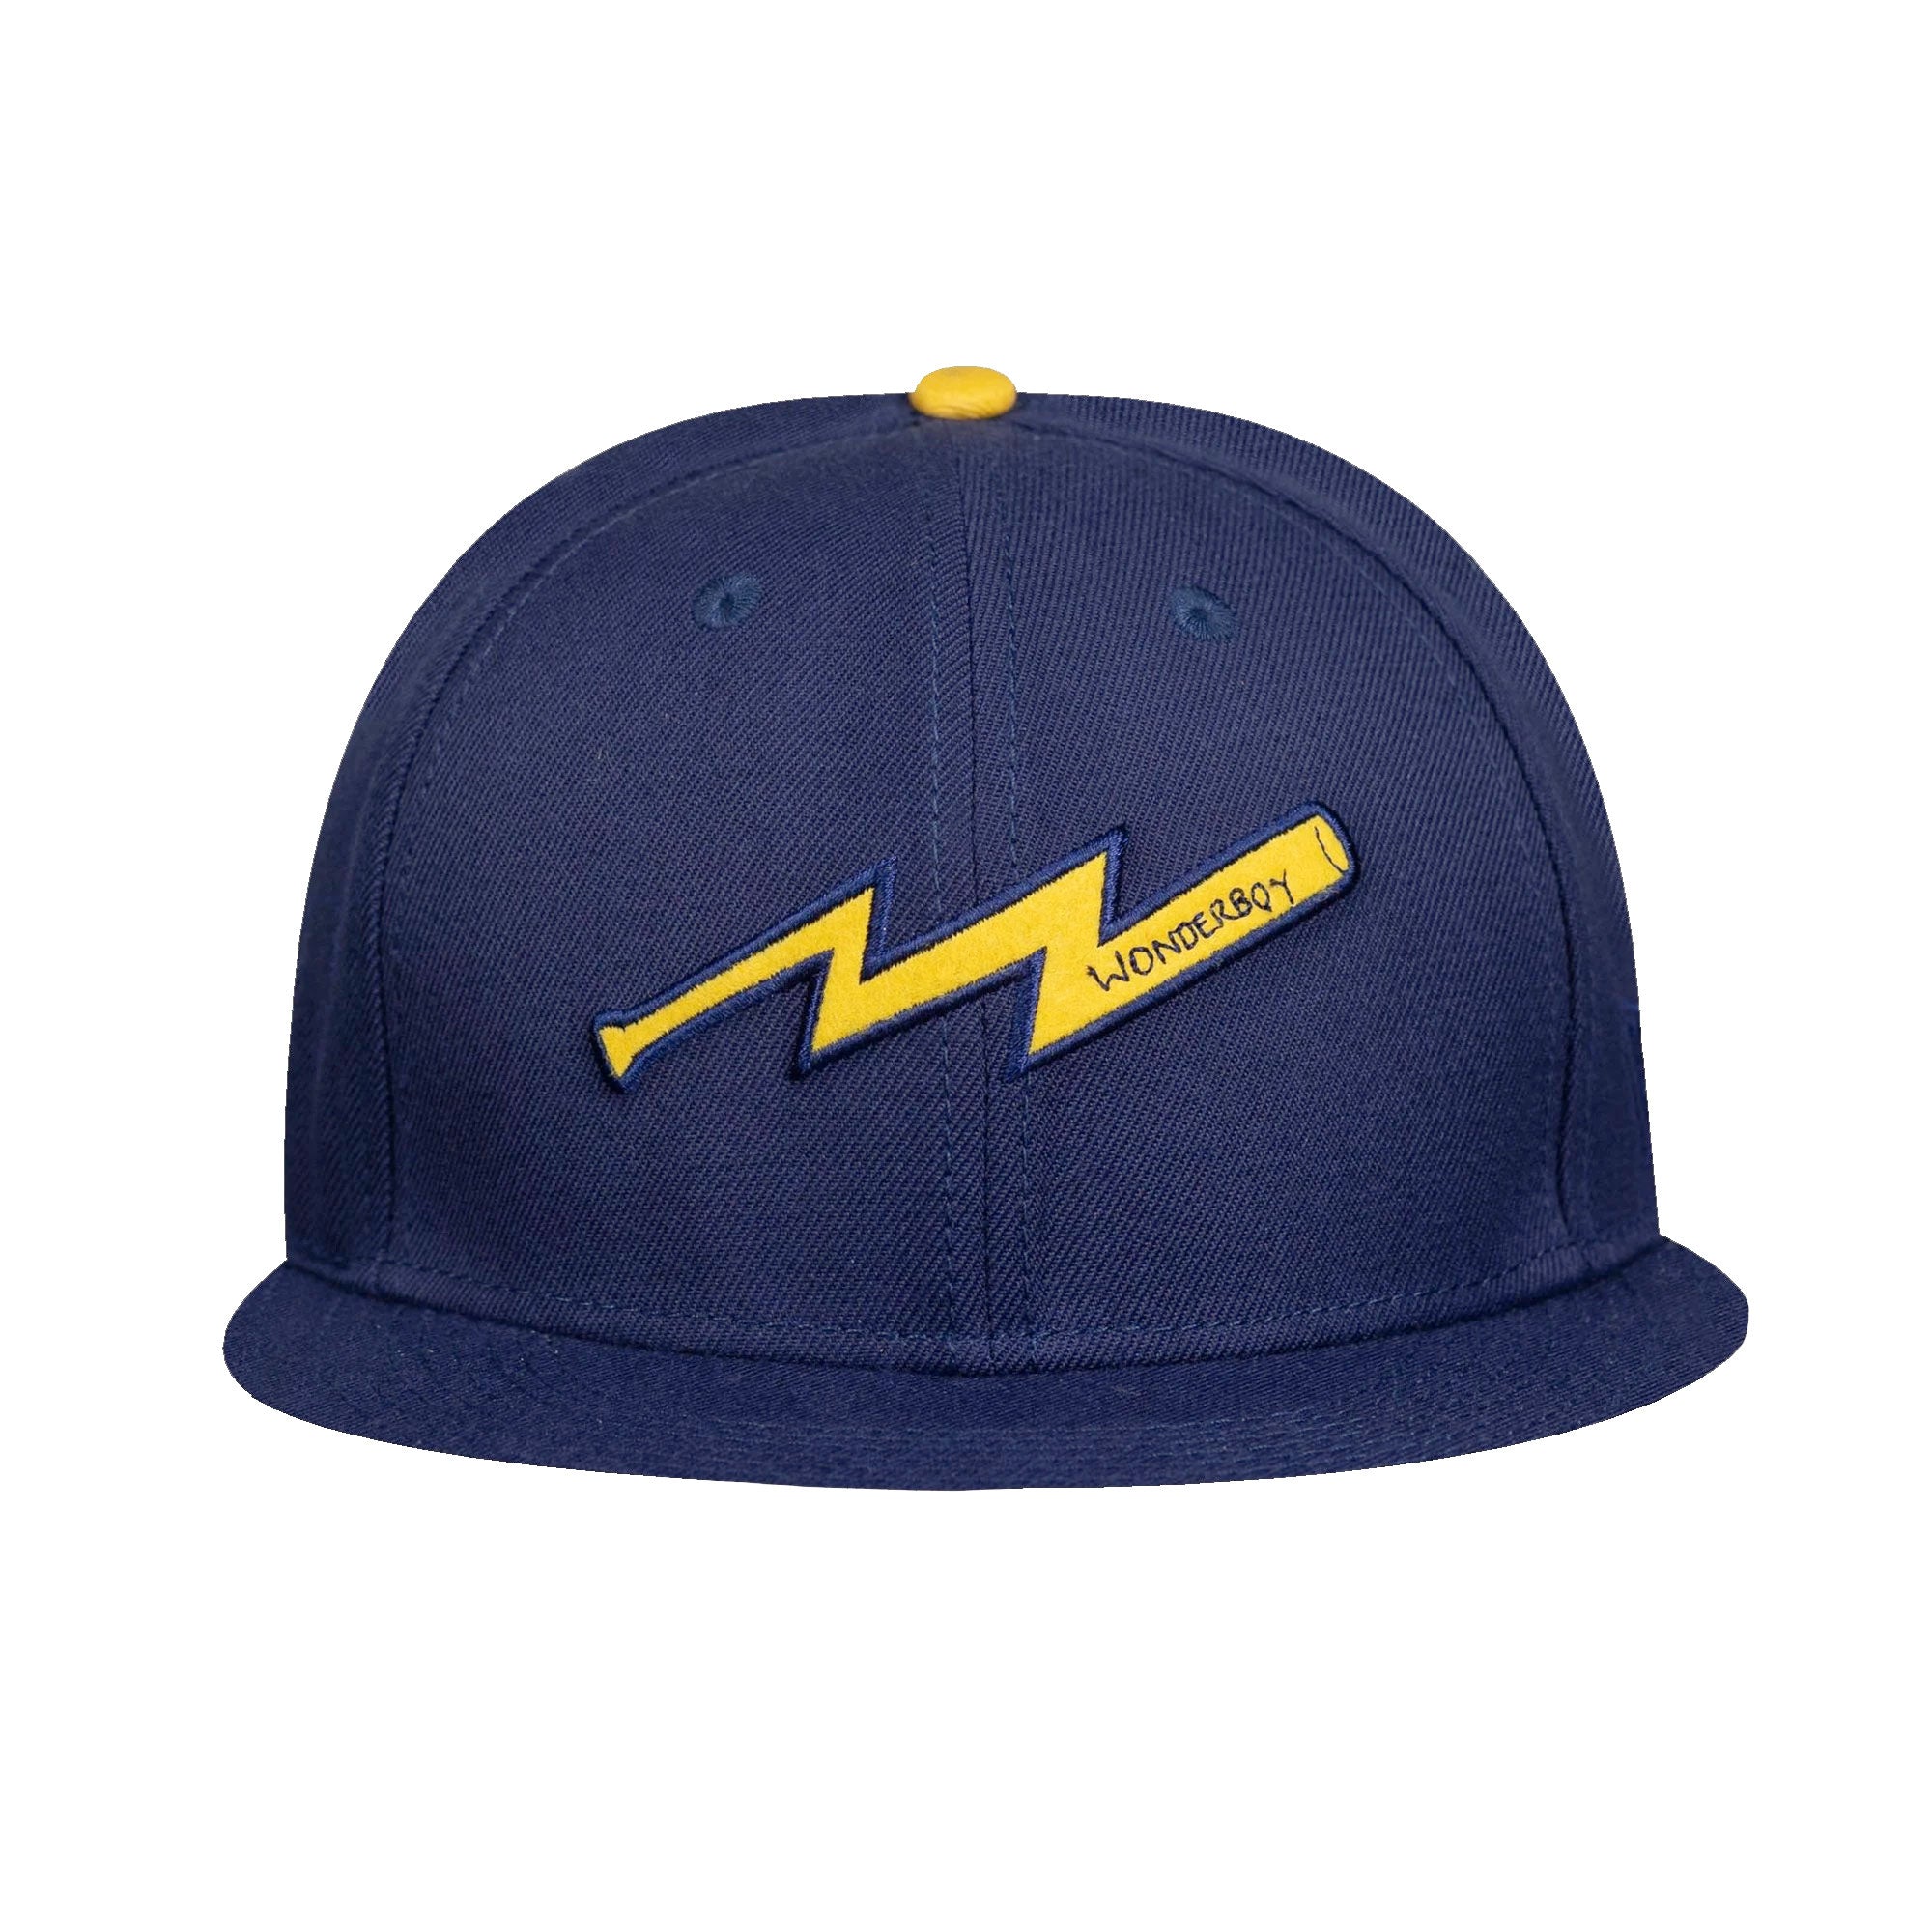 Baseballism Wonderboy Bat Company Snapback Hat - Navy - OSFA